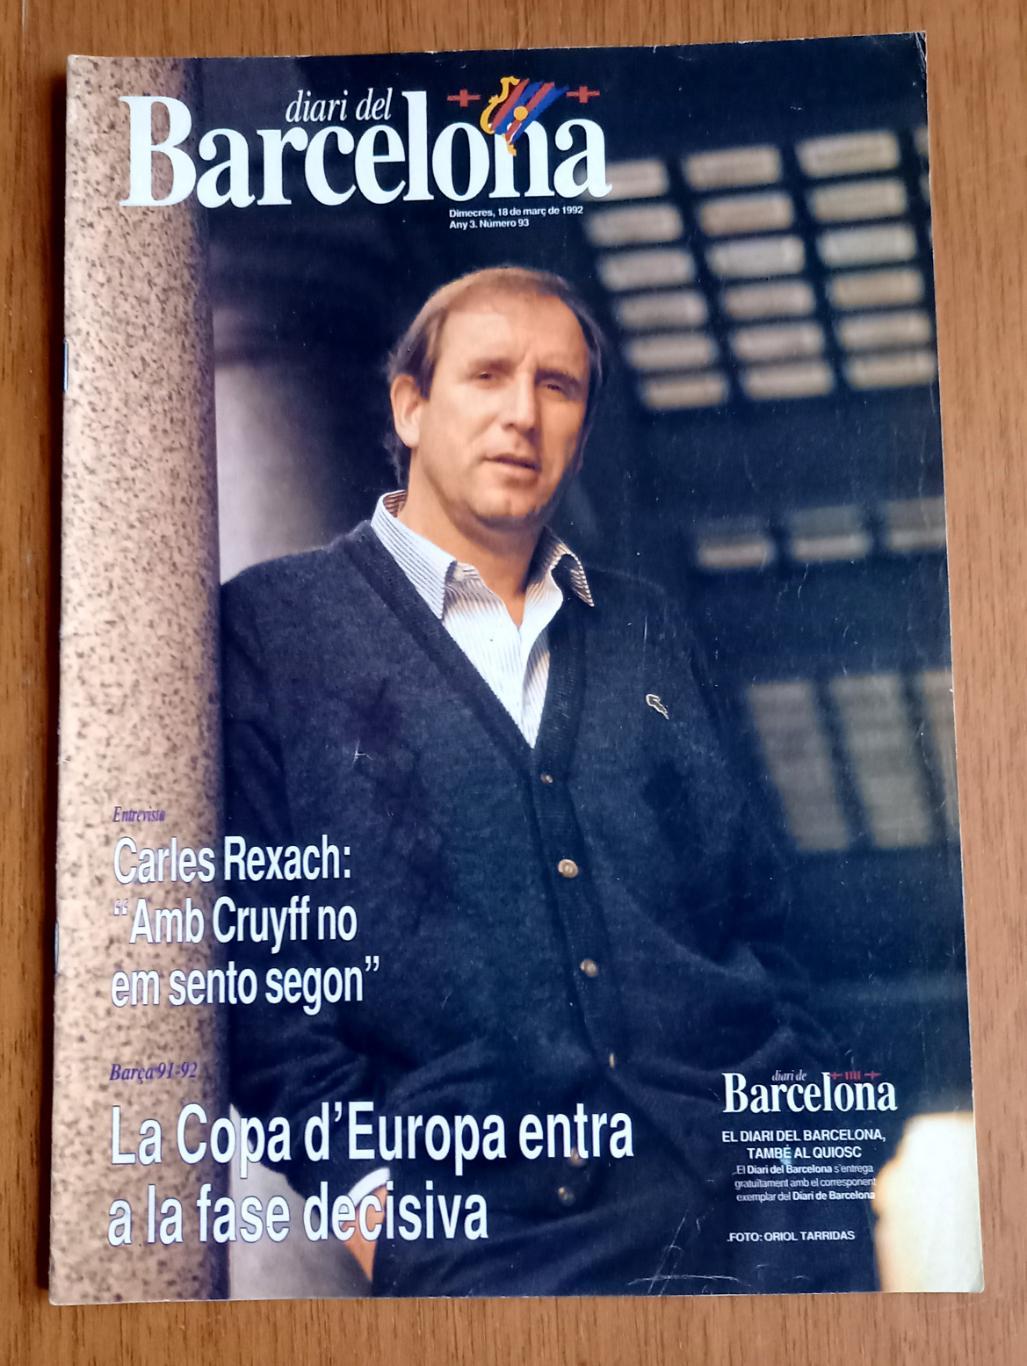 Футбол. Diari de Barcelona (Испания). Лига чемпионов-1992/93. Динамо Киев